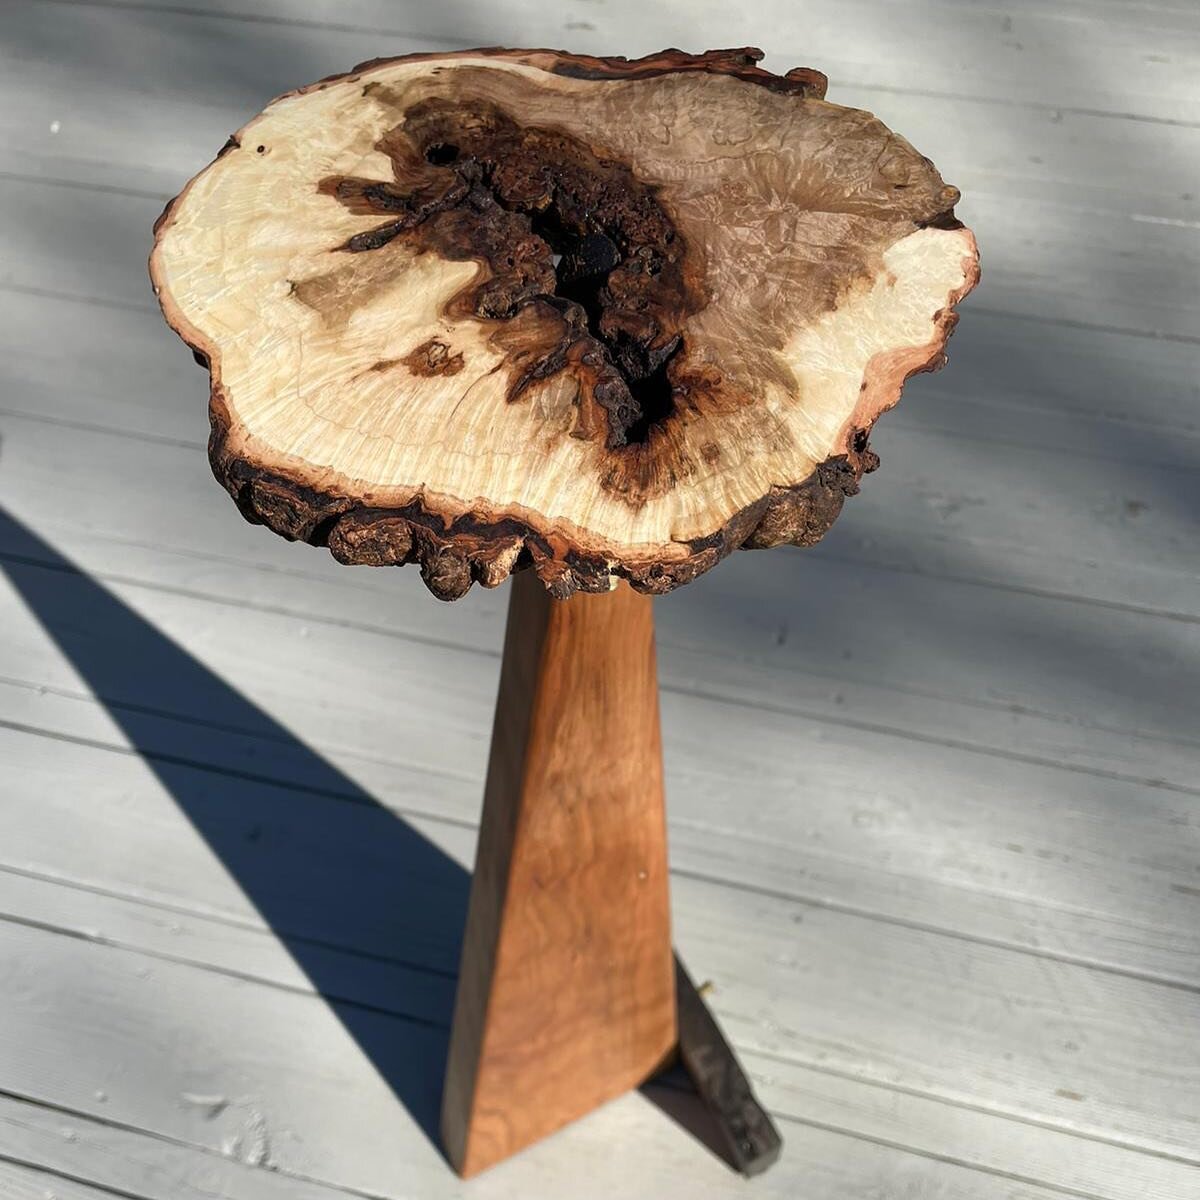 Pedestal 2021
#MapleBurl #Cherry #LakeMichigan #Shipwreck #Oak #michigan #wood #woodworking #tabletop #naturalwood #naturaledge